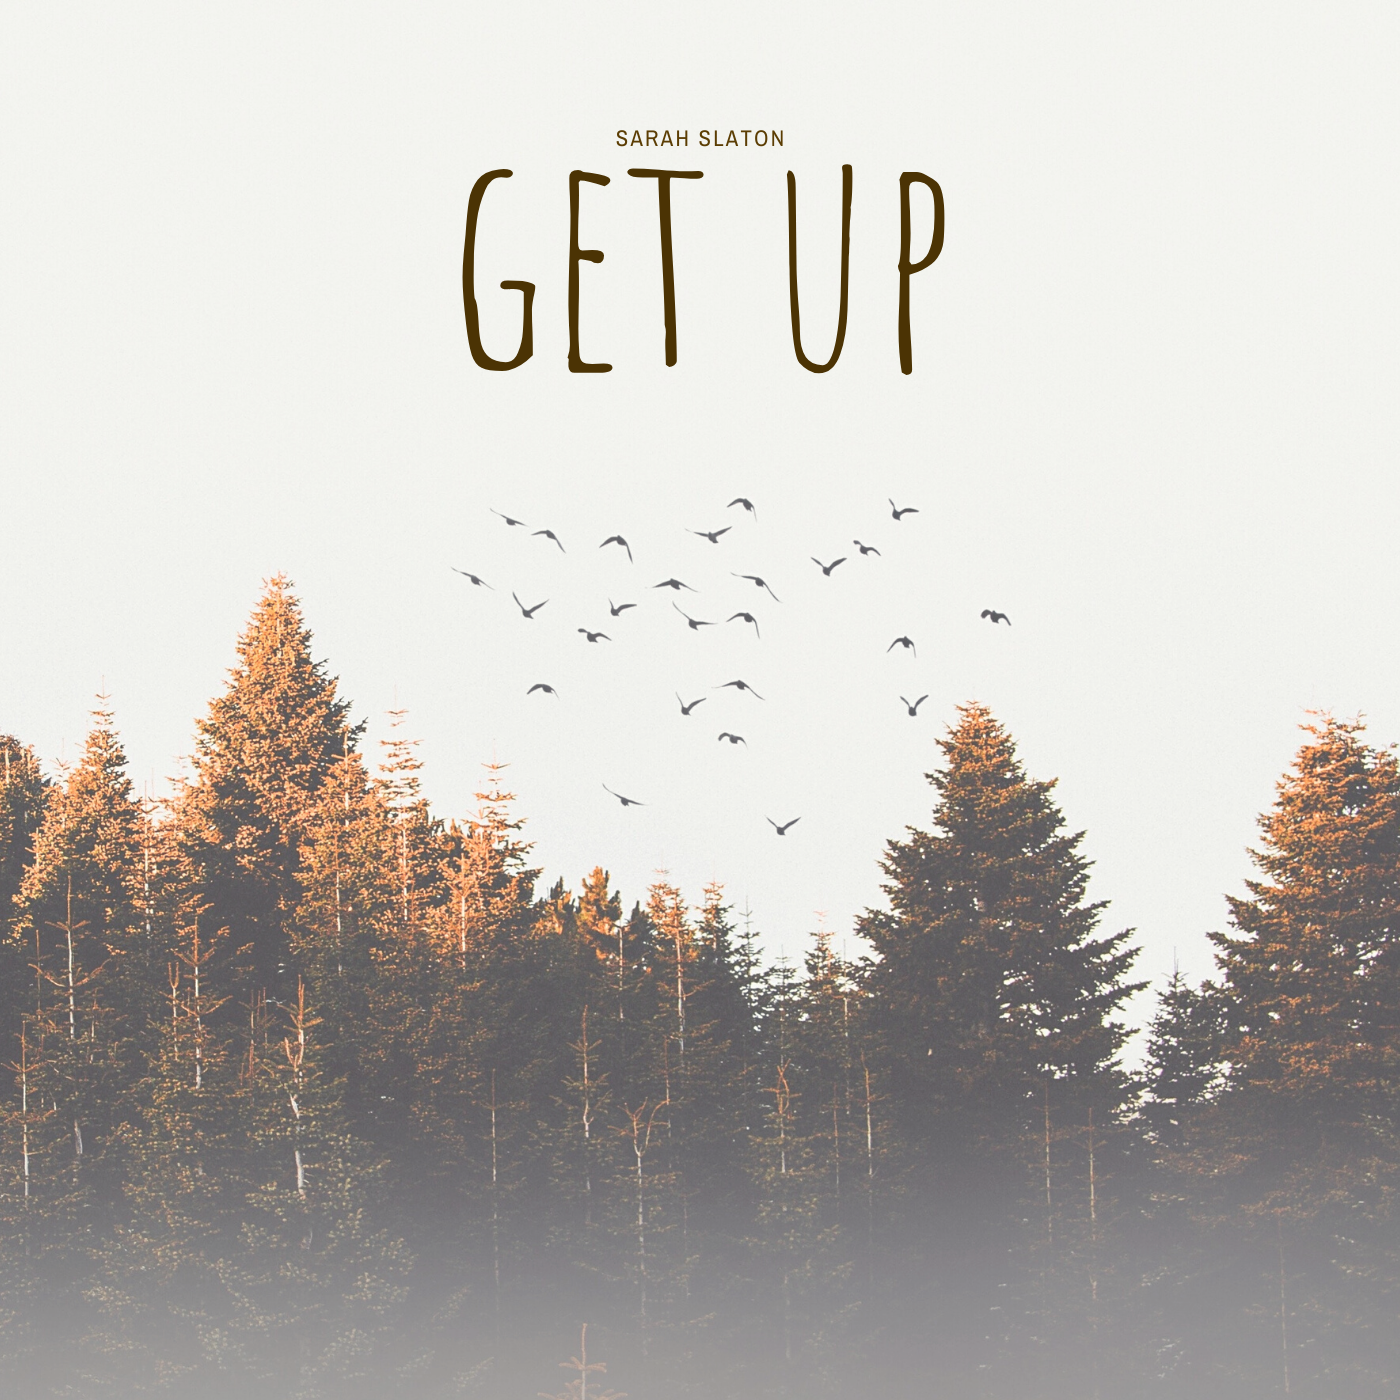 Cover art for Sarah Slaton's single, "Get Up"